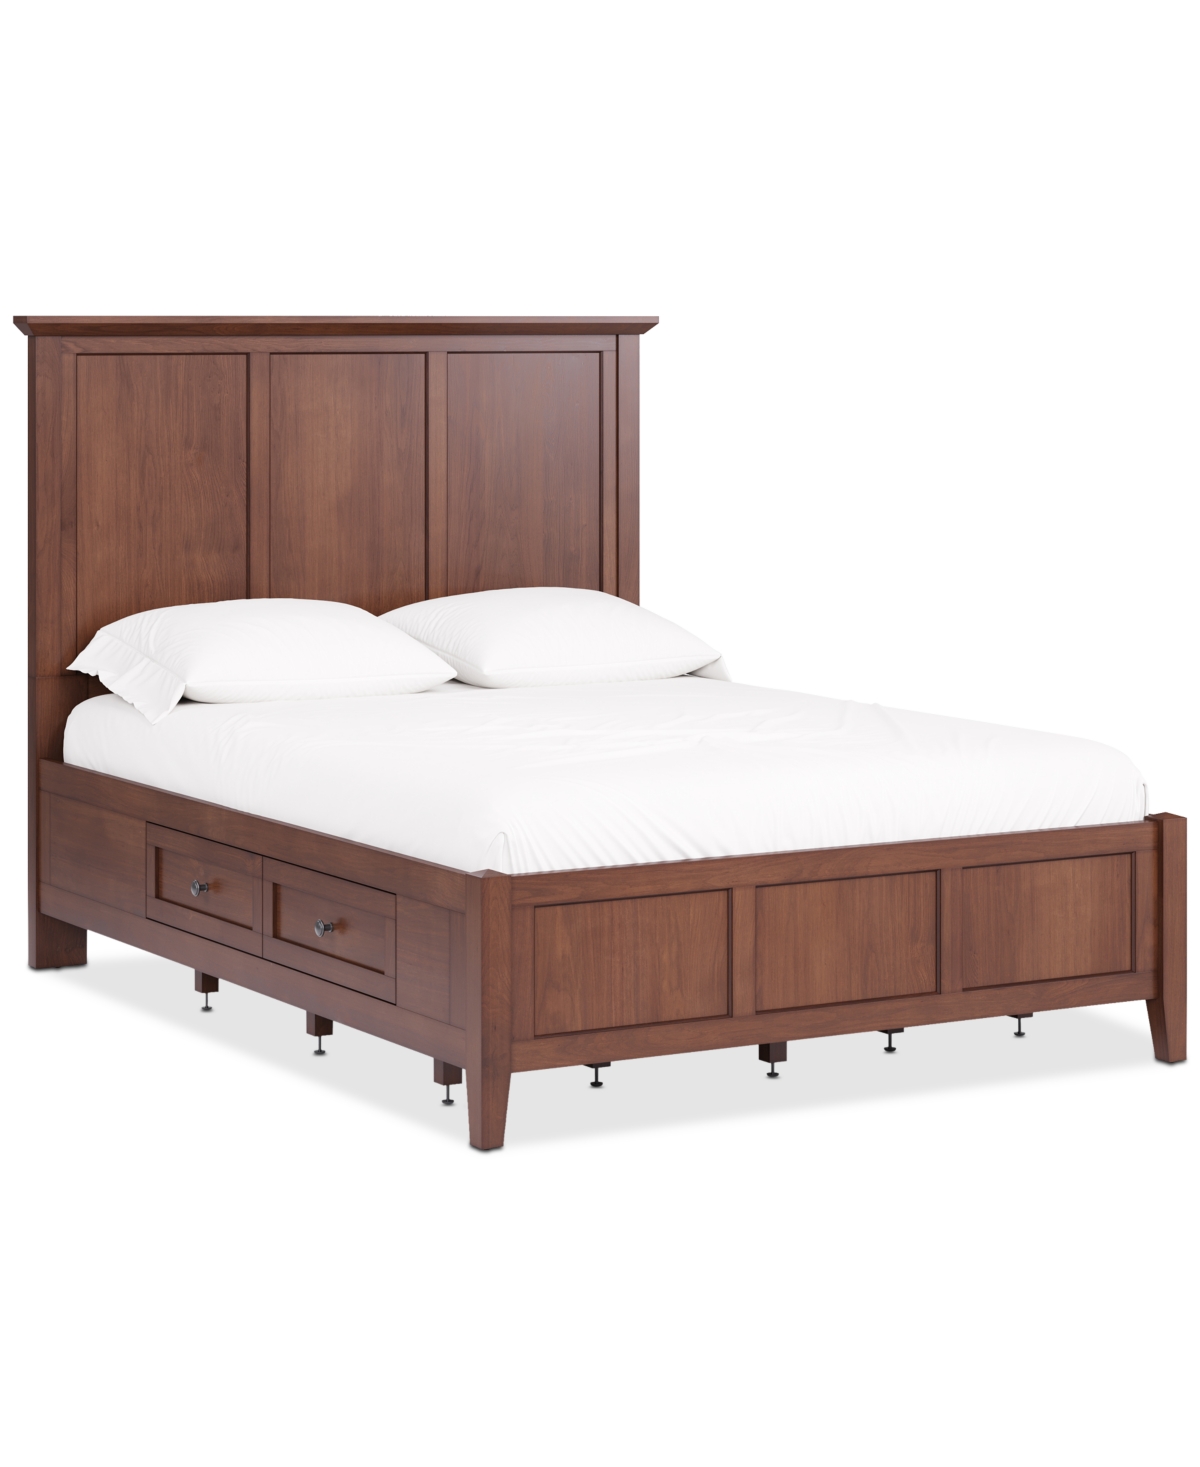 Macy's Hedworth Queen Storage Bed In Brown